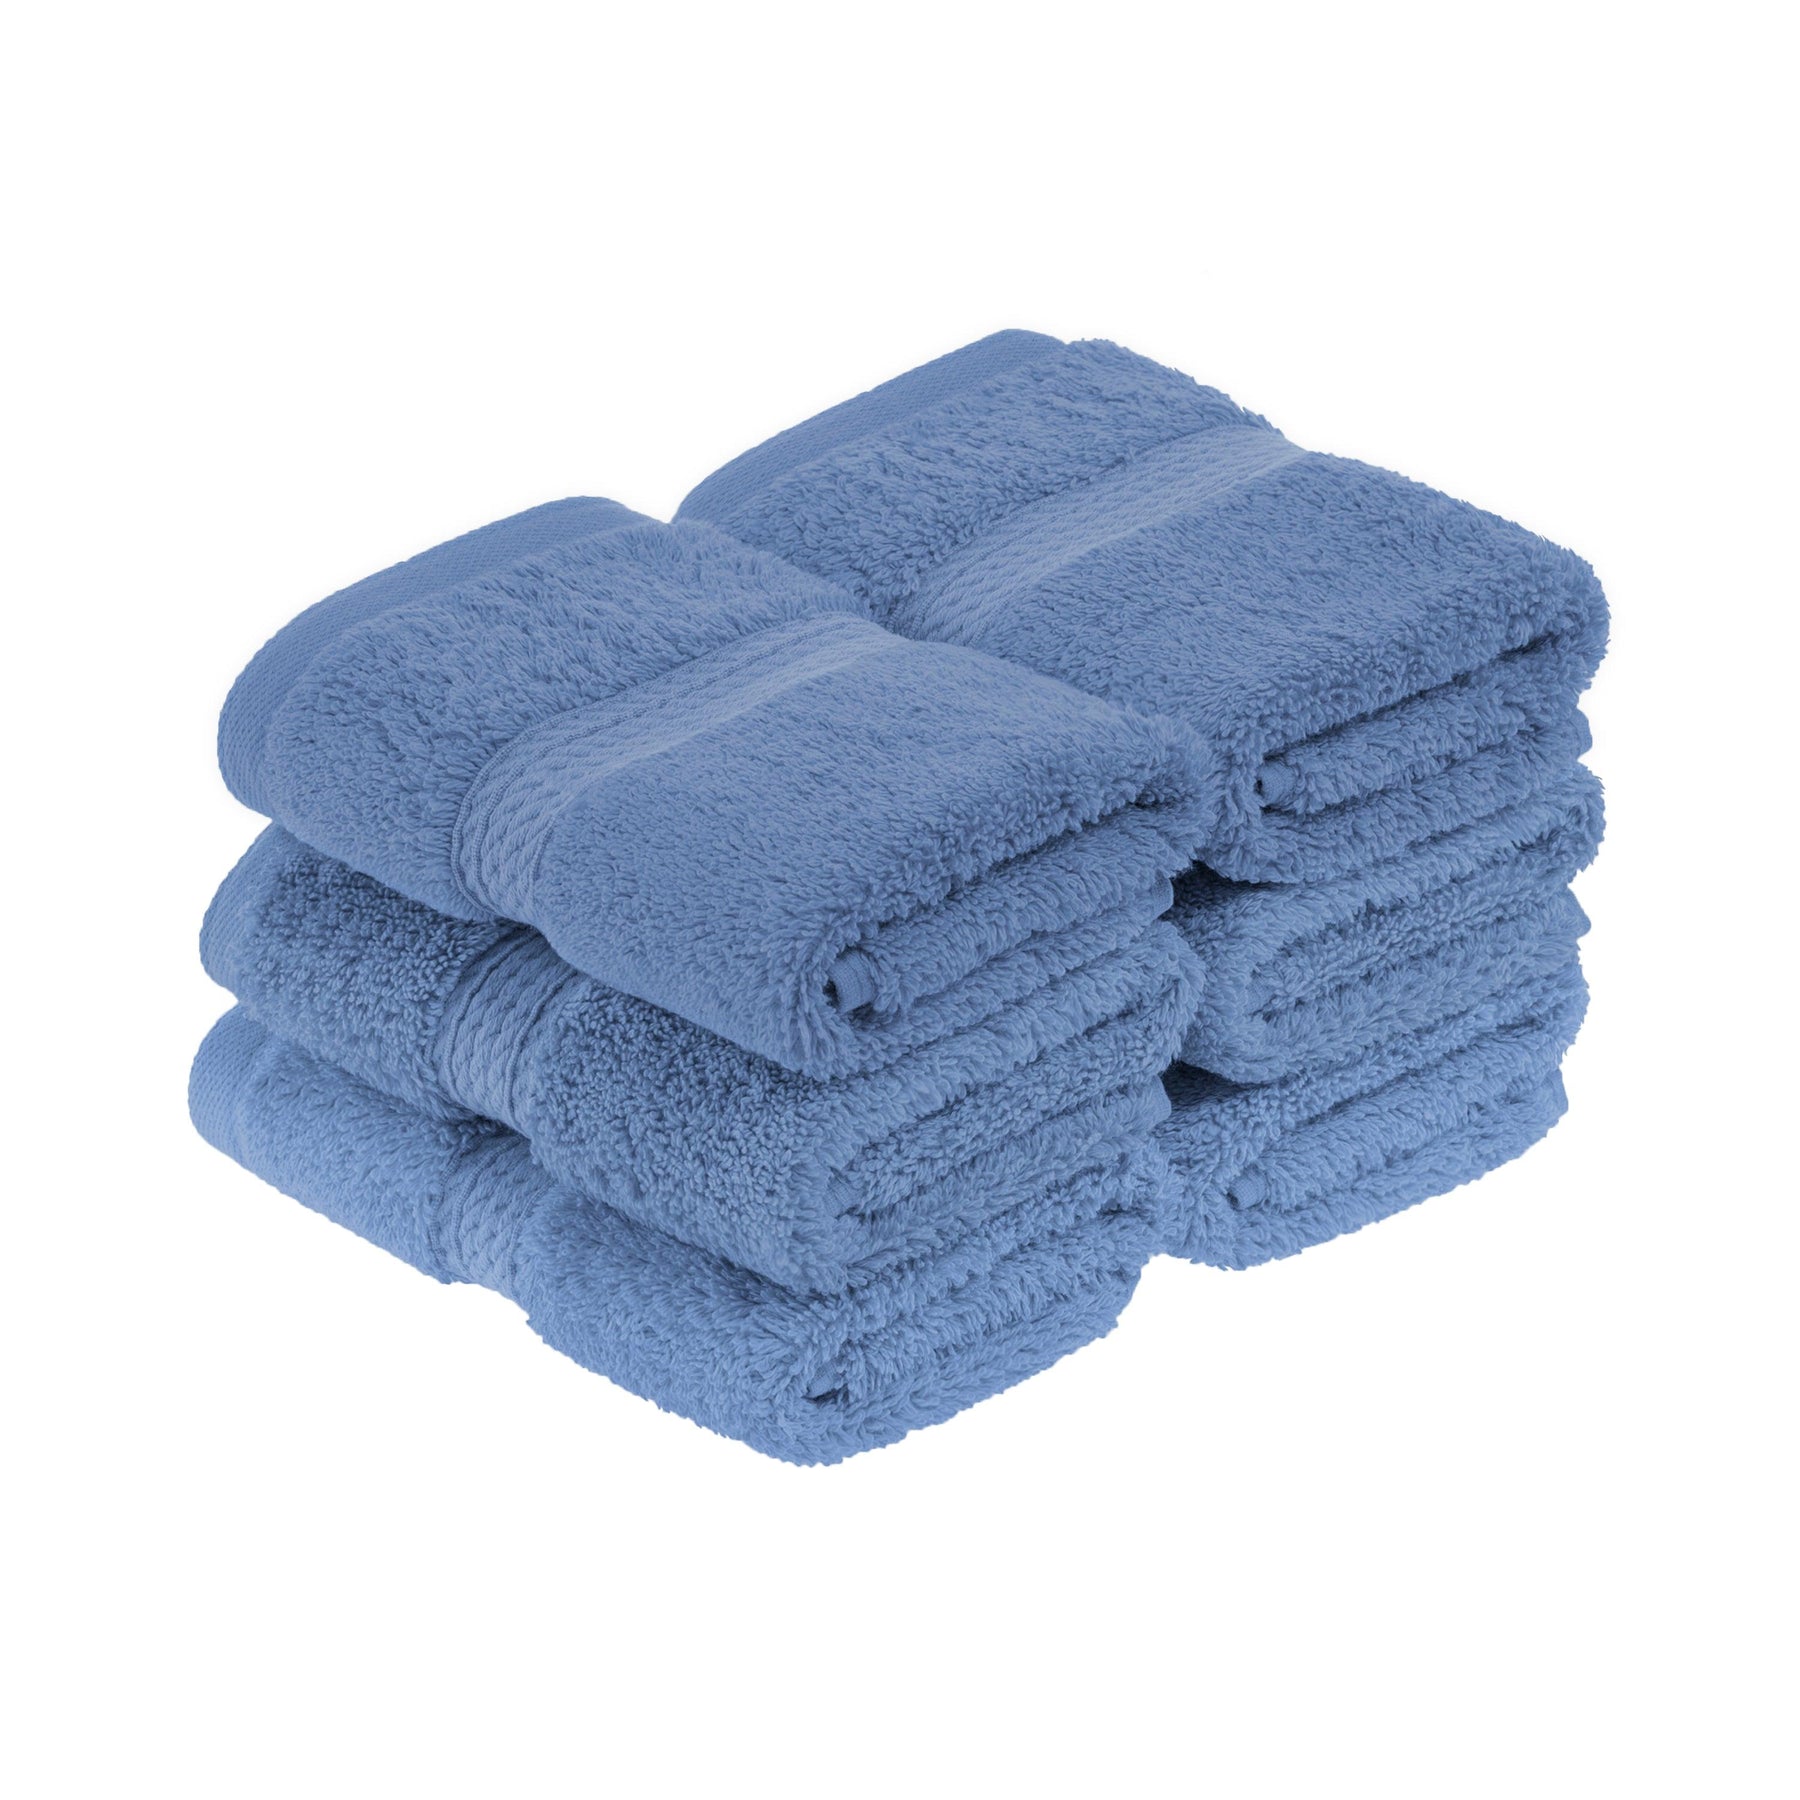 Egyptian Cotton Heavyweight 6 Piece Face Towel/ Washcloth Set - Denim Blue